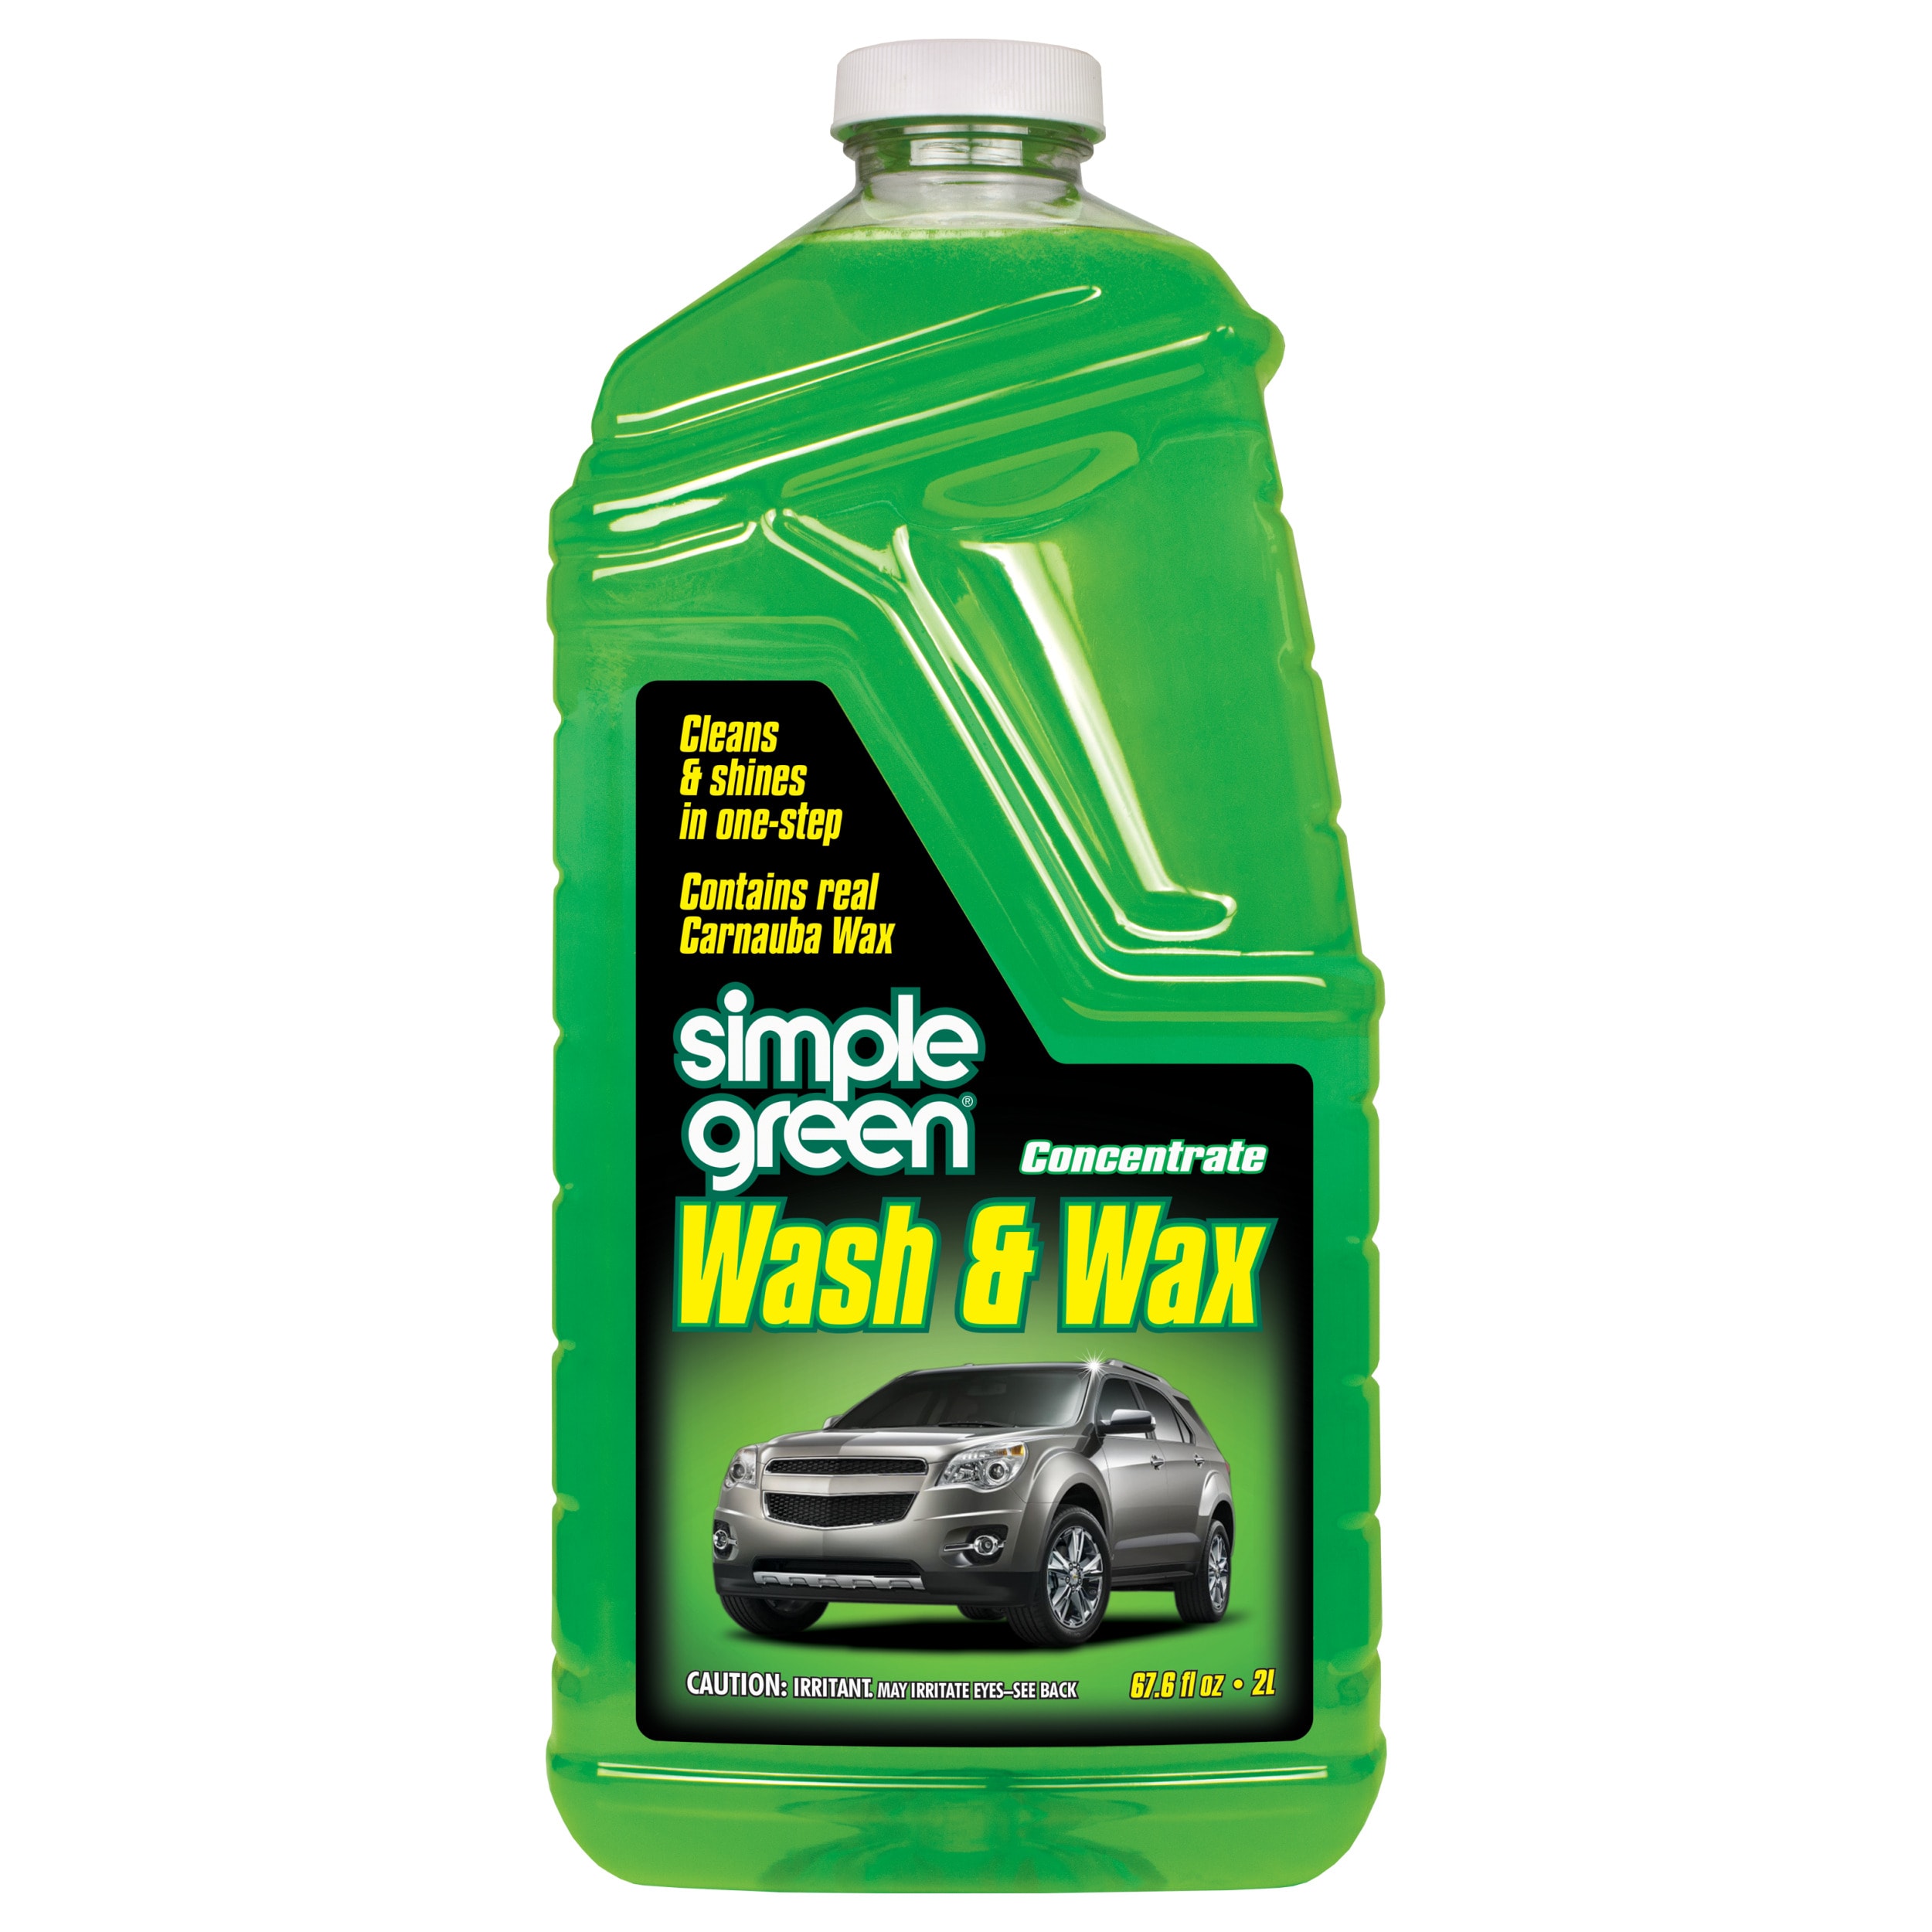 Reviews for TURTLE WAX 100 fl. oz. Max-Power Car Wash